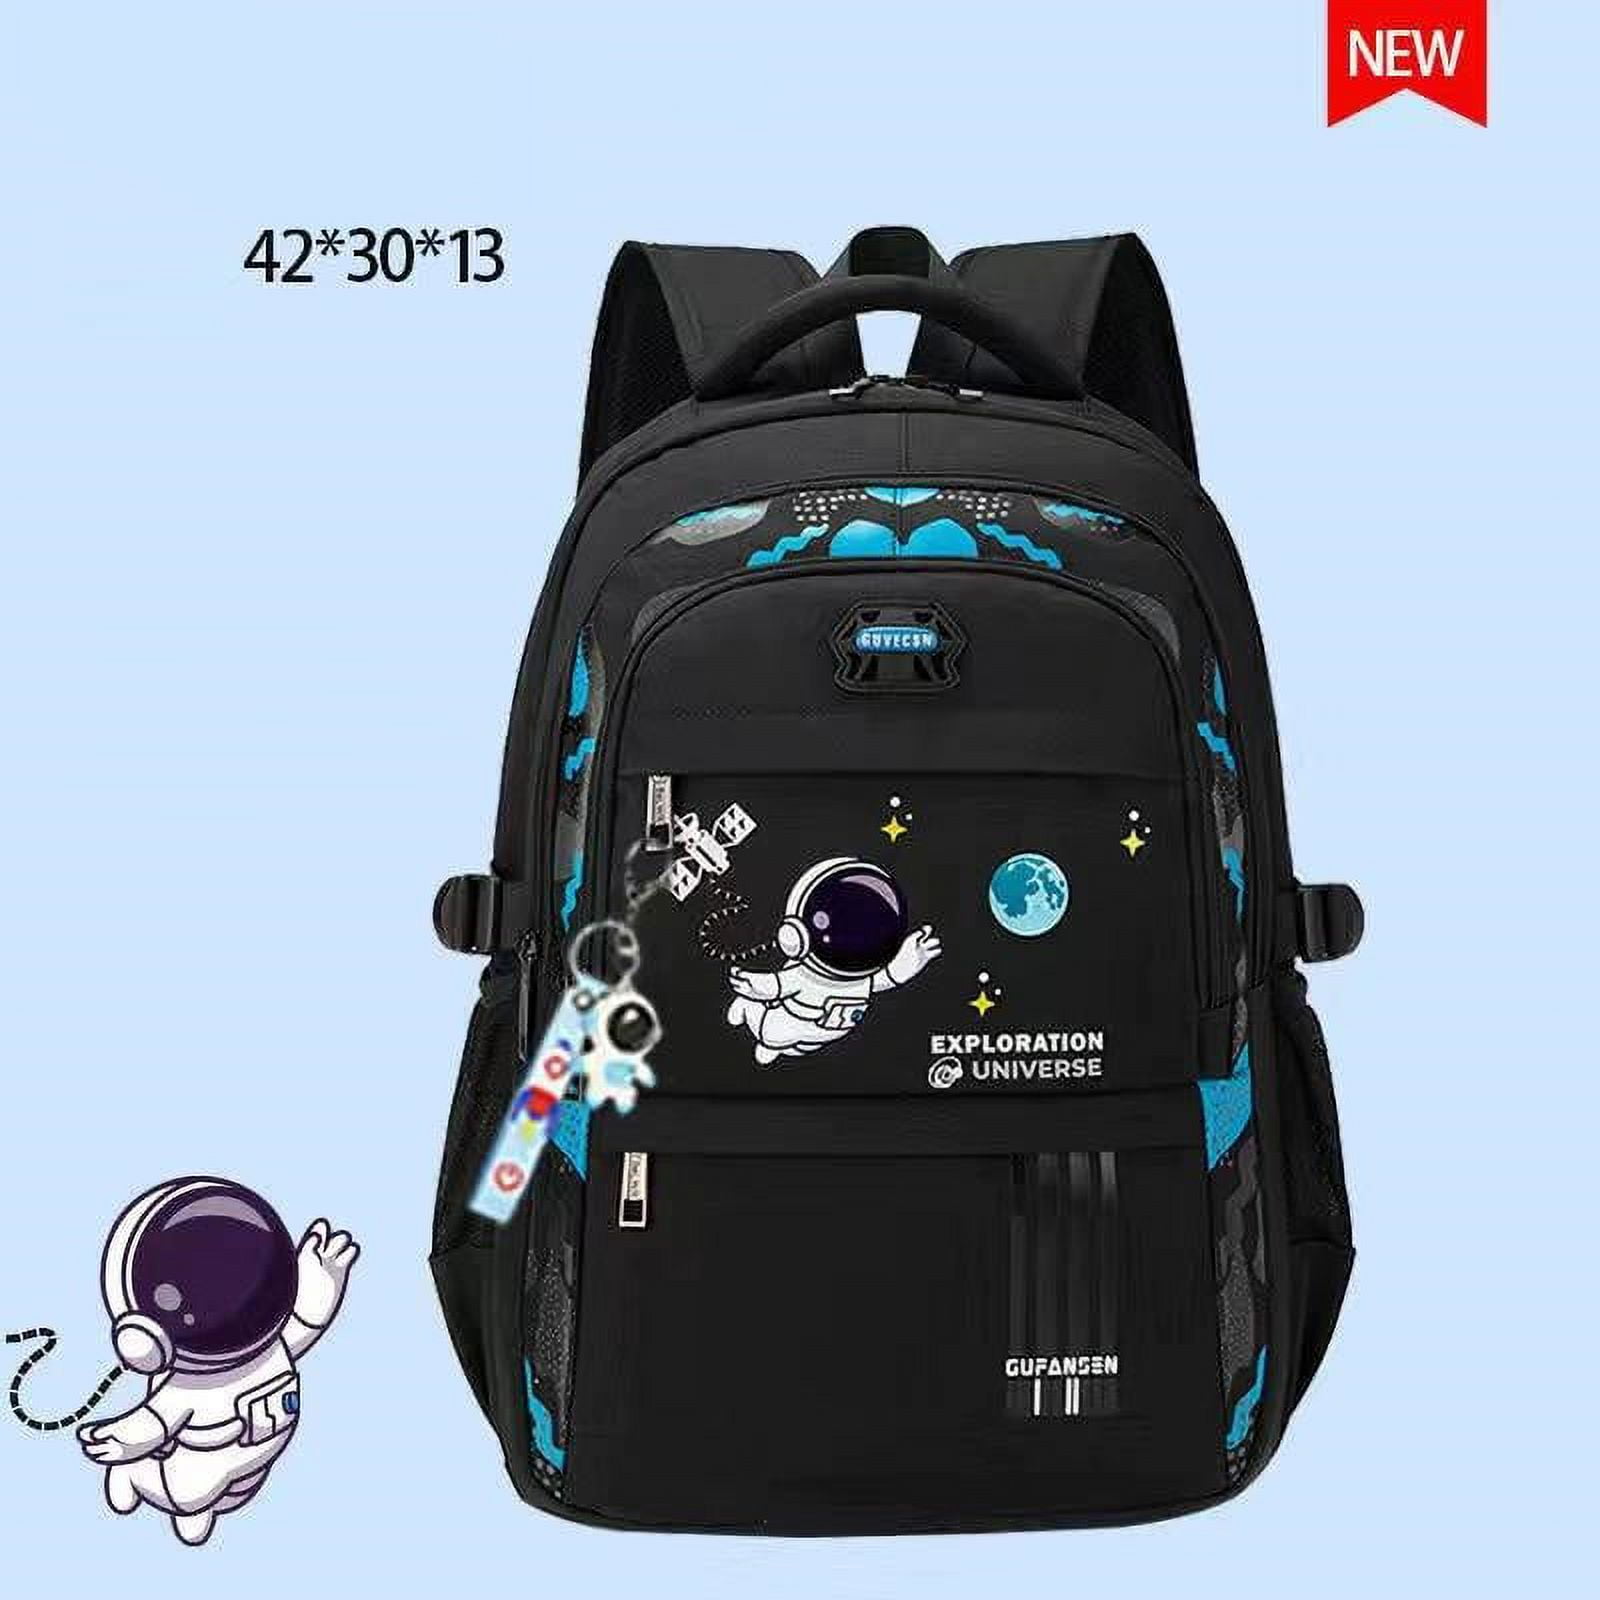  mibasies Kids Backpack for Boys, Kindergarten Backpack School  Bag for Children Age 5-8, Dark Blue